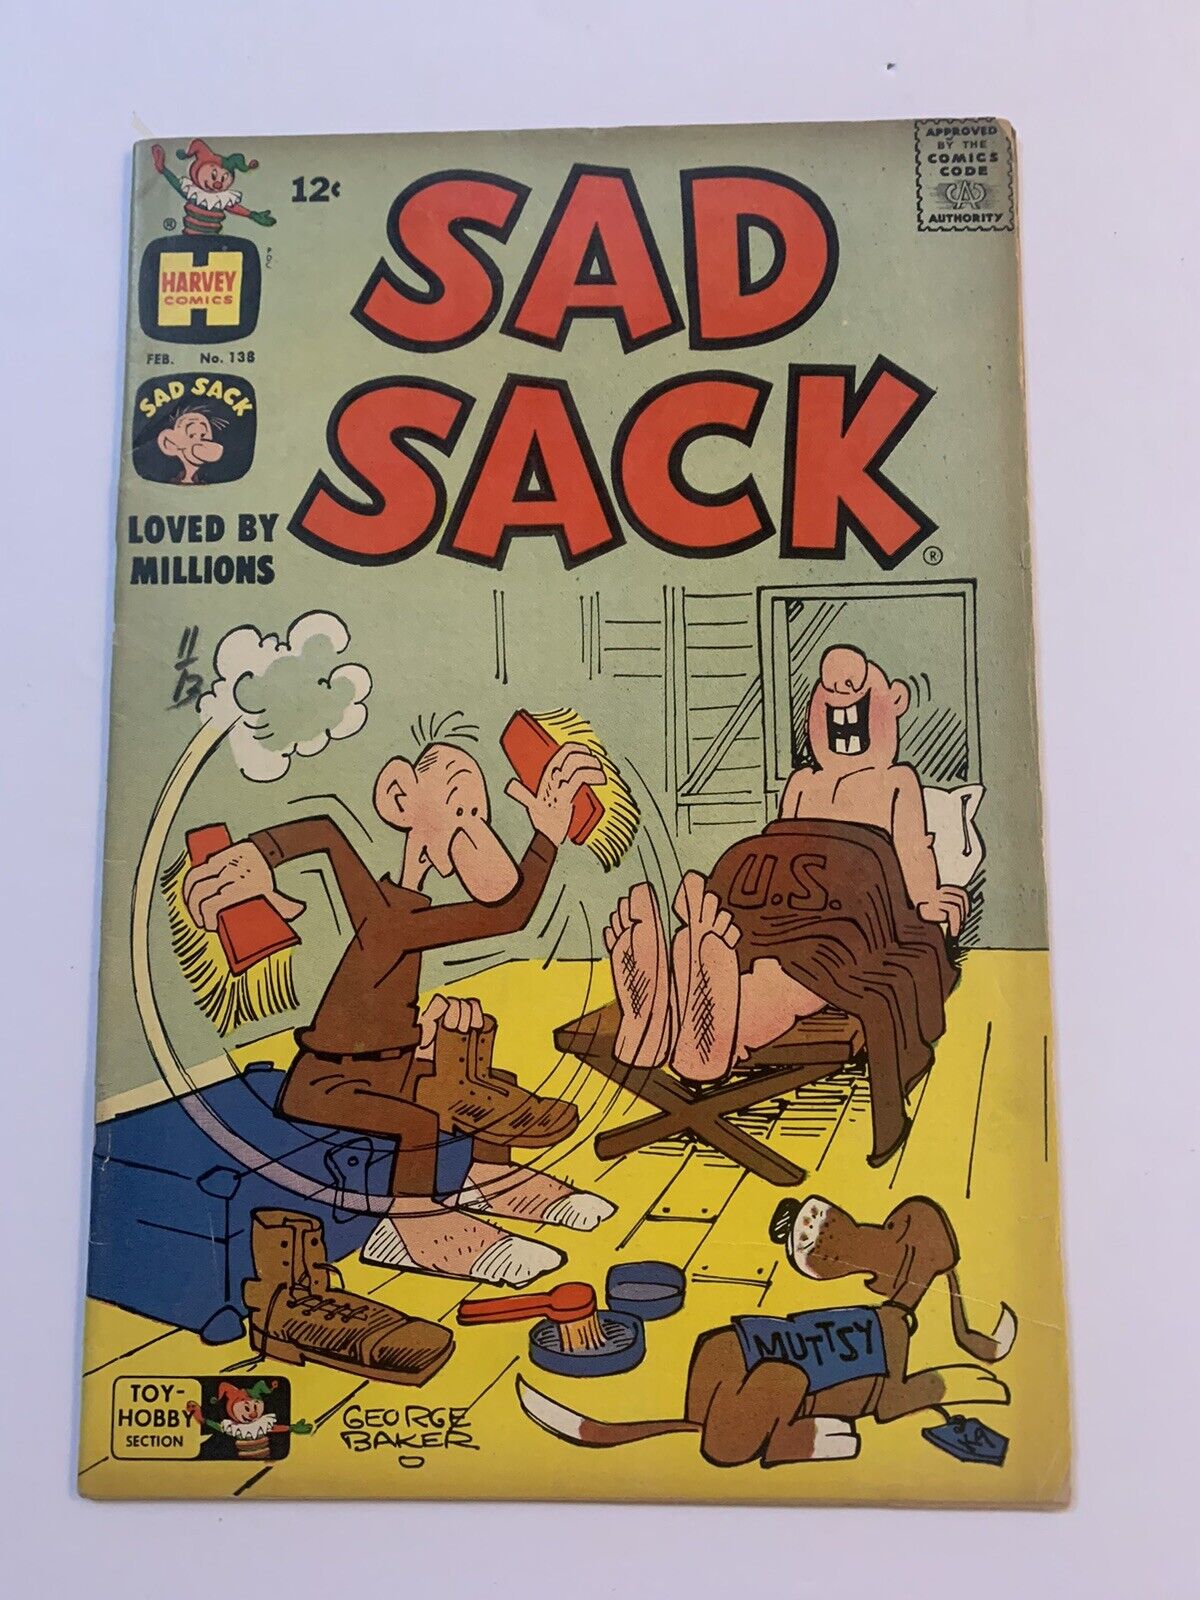 SAD SACK Harvey Comics #138 February 1963 George Baker SHOE SHINE Schwinn - Nice